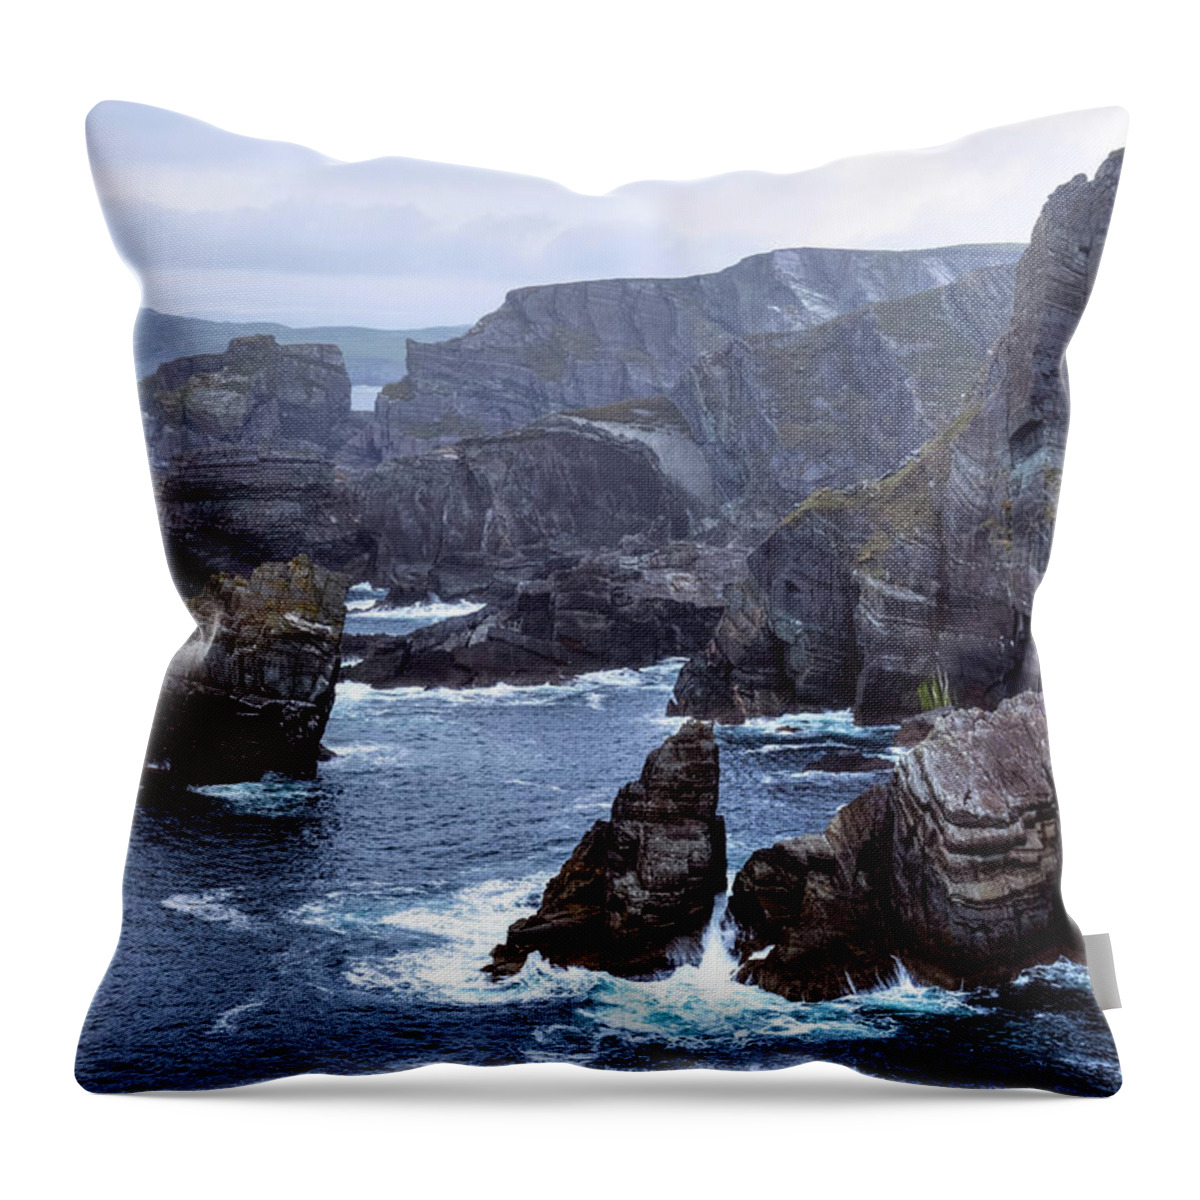 Mizen Head Throw Pillow featuring the photograph Mizen Head - Ireland #1 by Joana Kruse